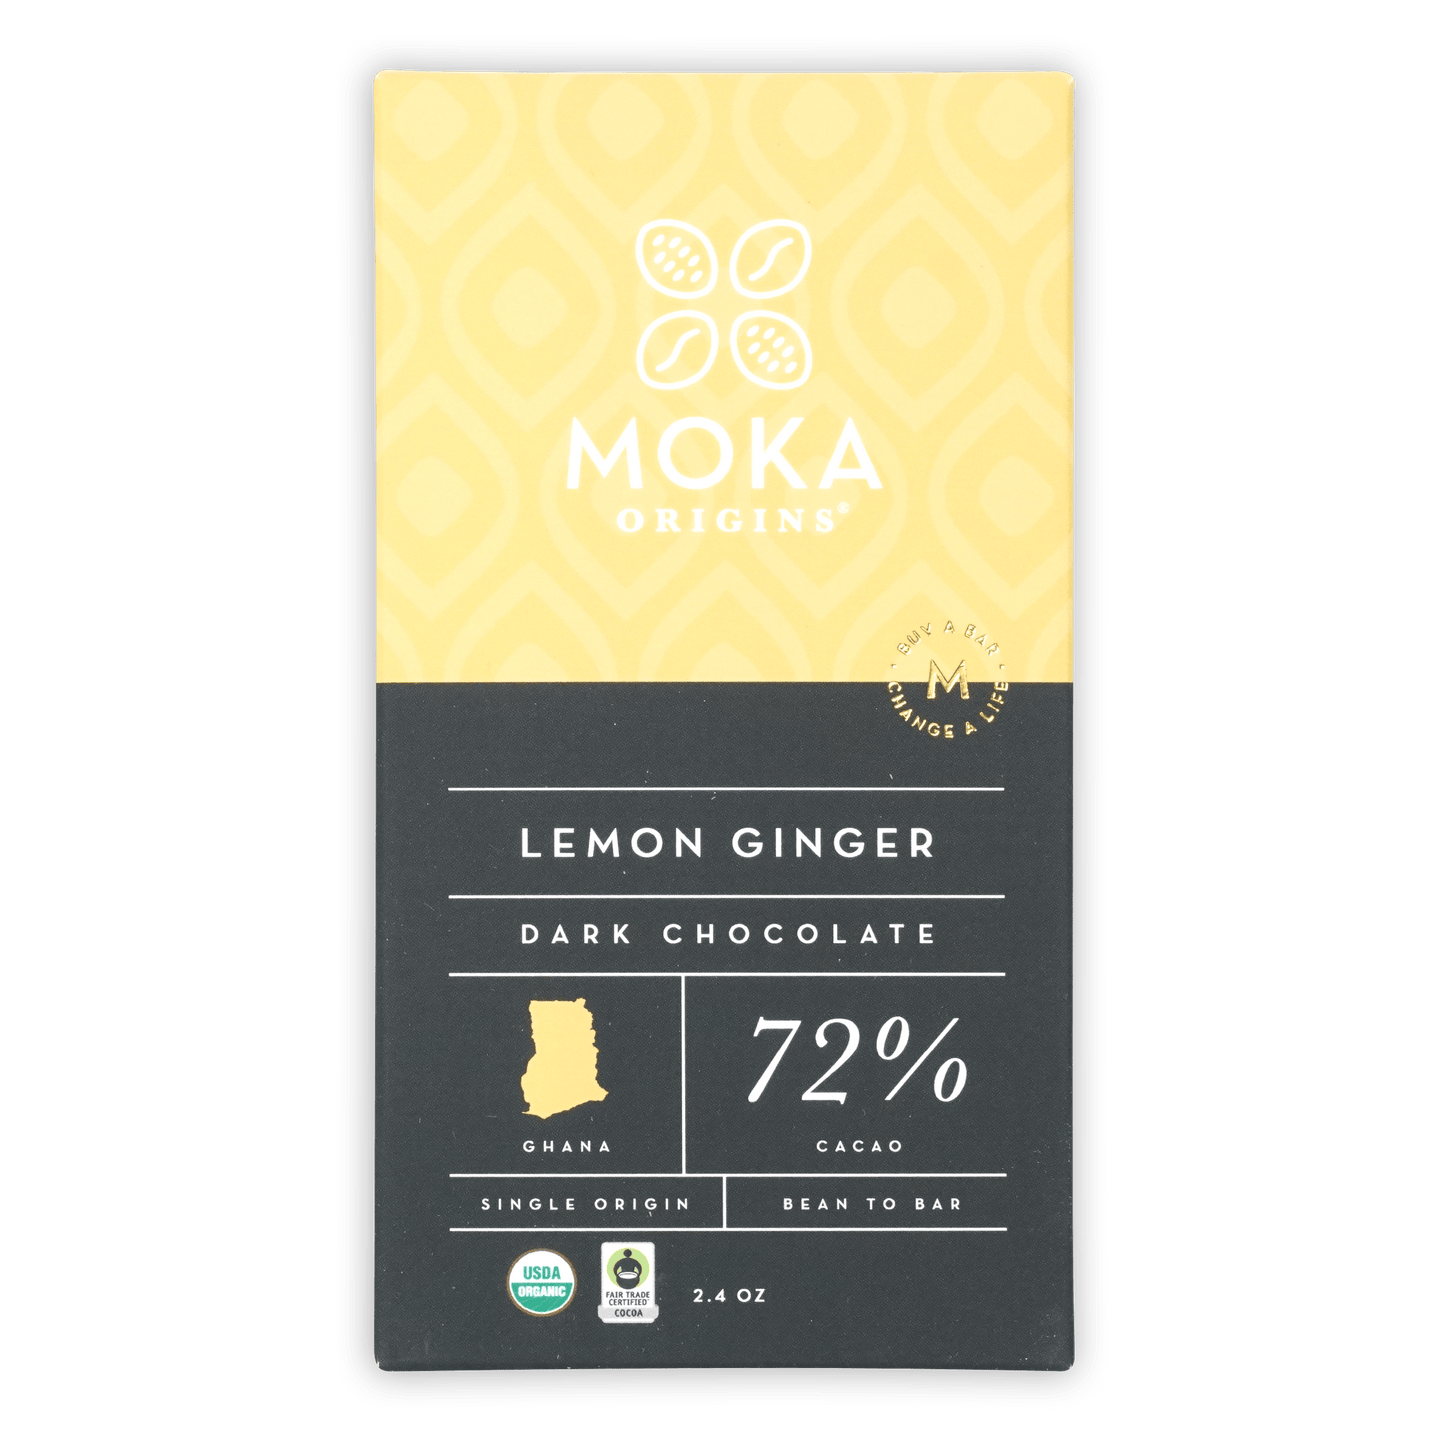 Moka Dark Chocolate w/ Lemon Ginger 72%